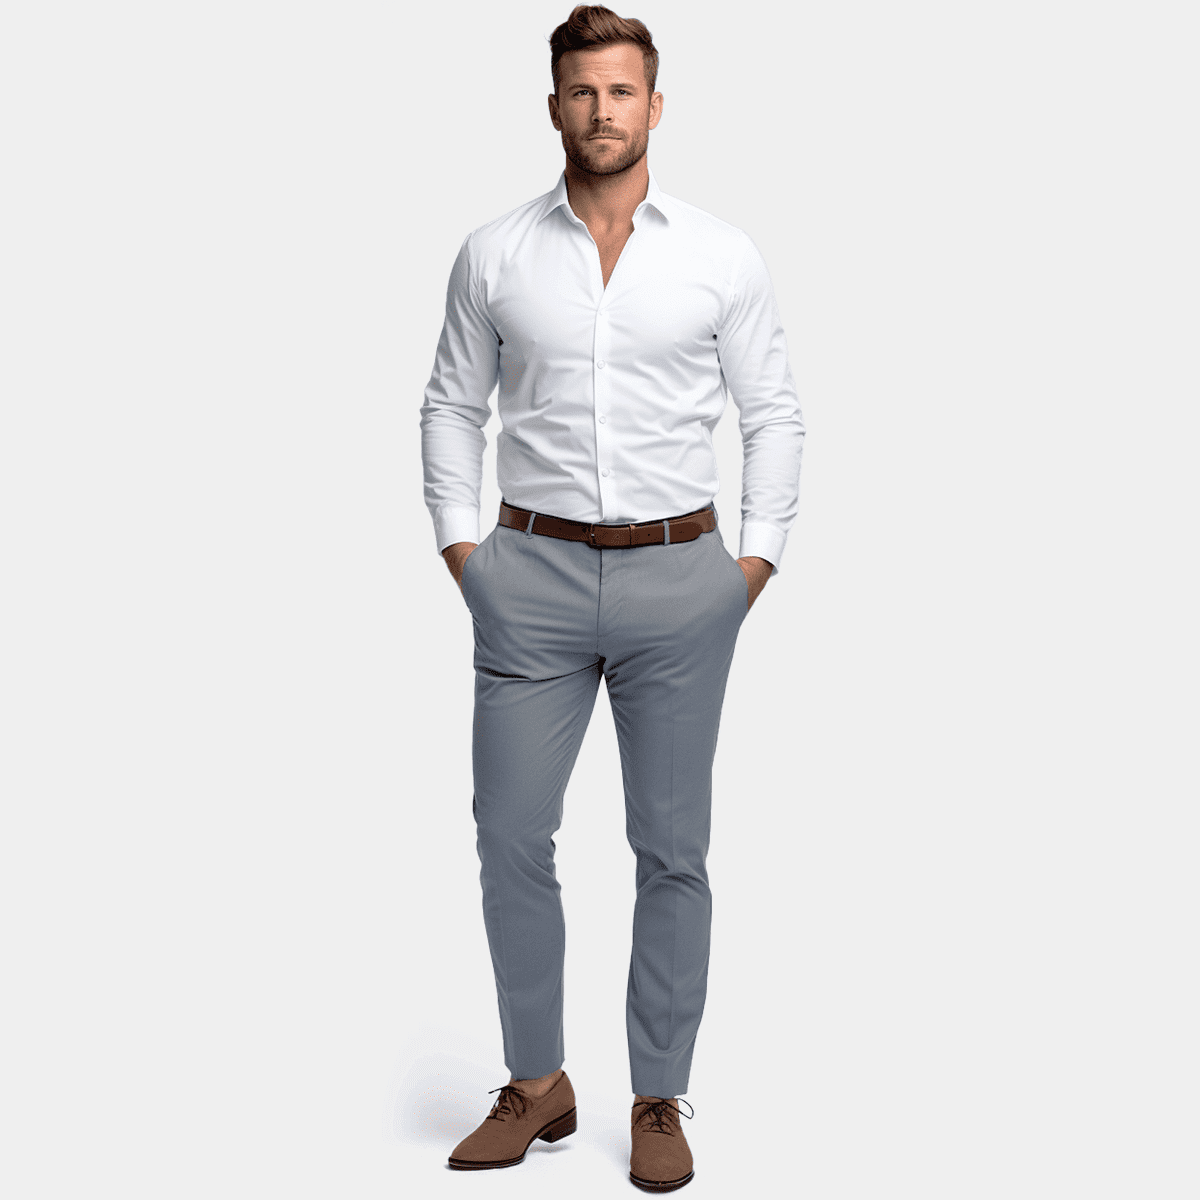 Top Grey Shirt Matching Pant Colour Combinations